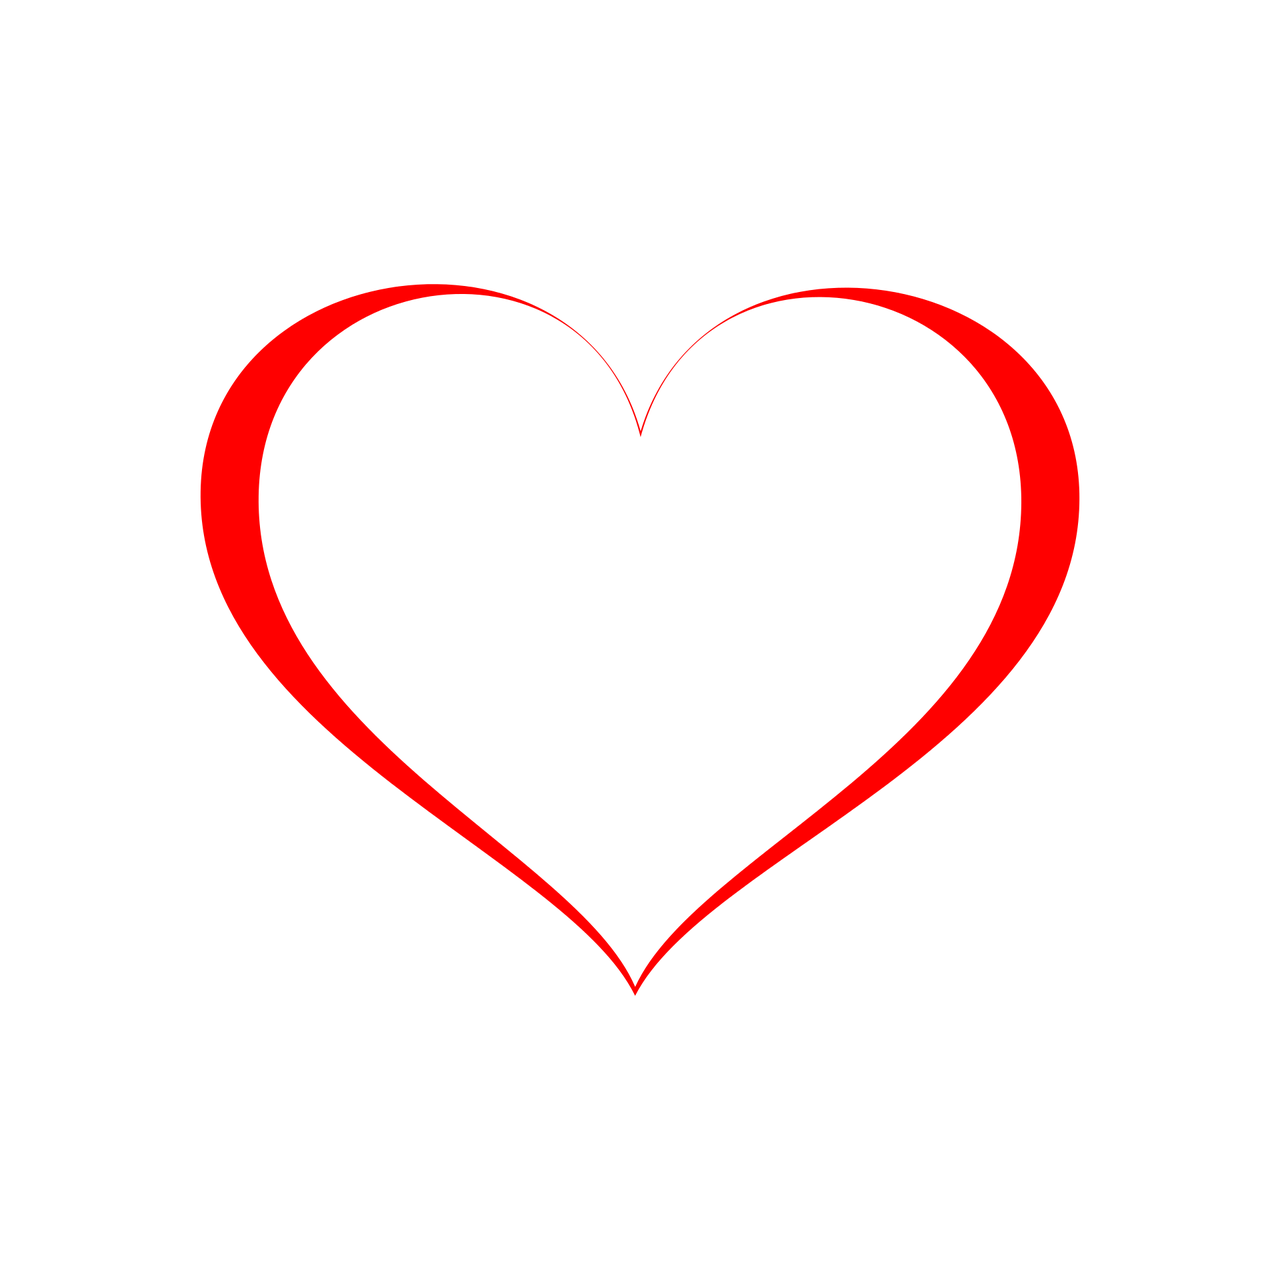 Ekg clipart red. Wedding heart icon symbol